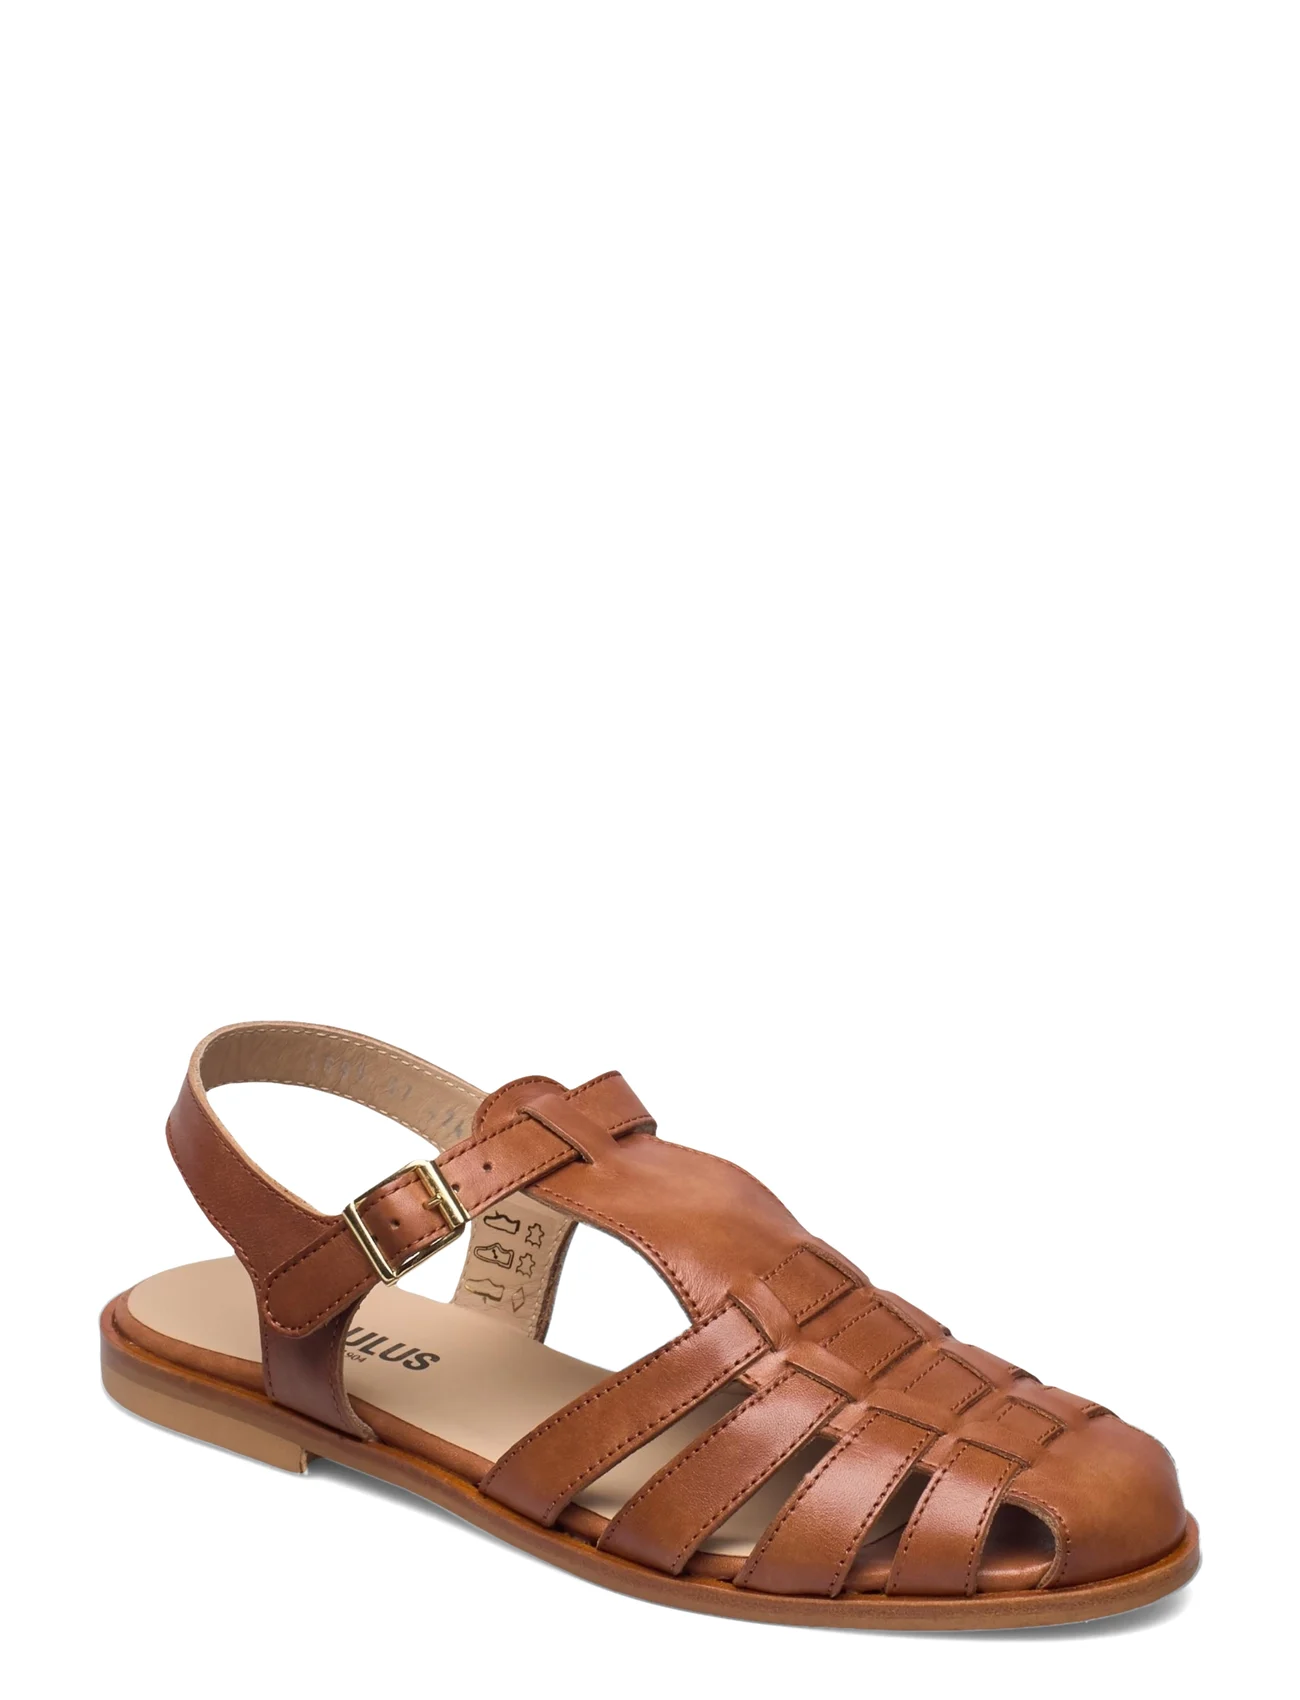 ANGULUS - Sandals - flat - closed toe - op - flat sandals - 1789 tan - 0